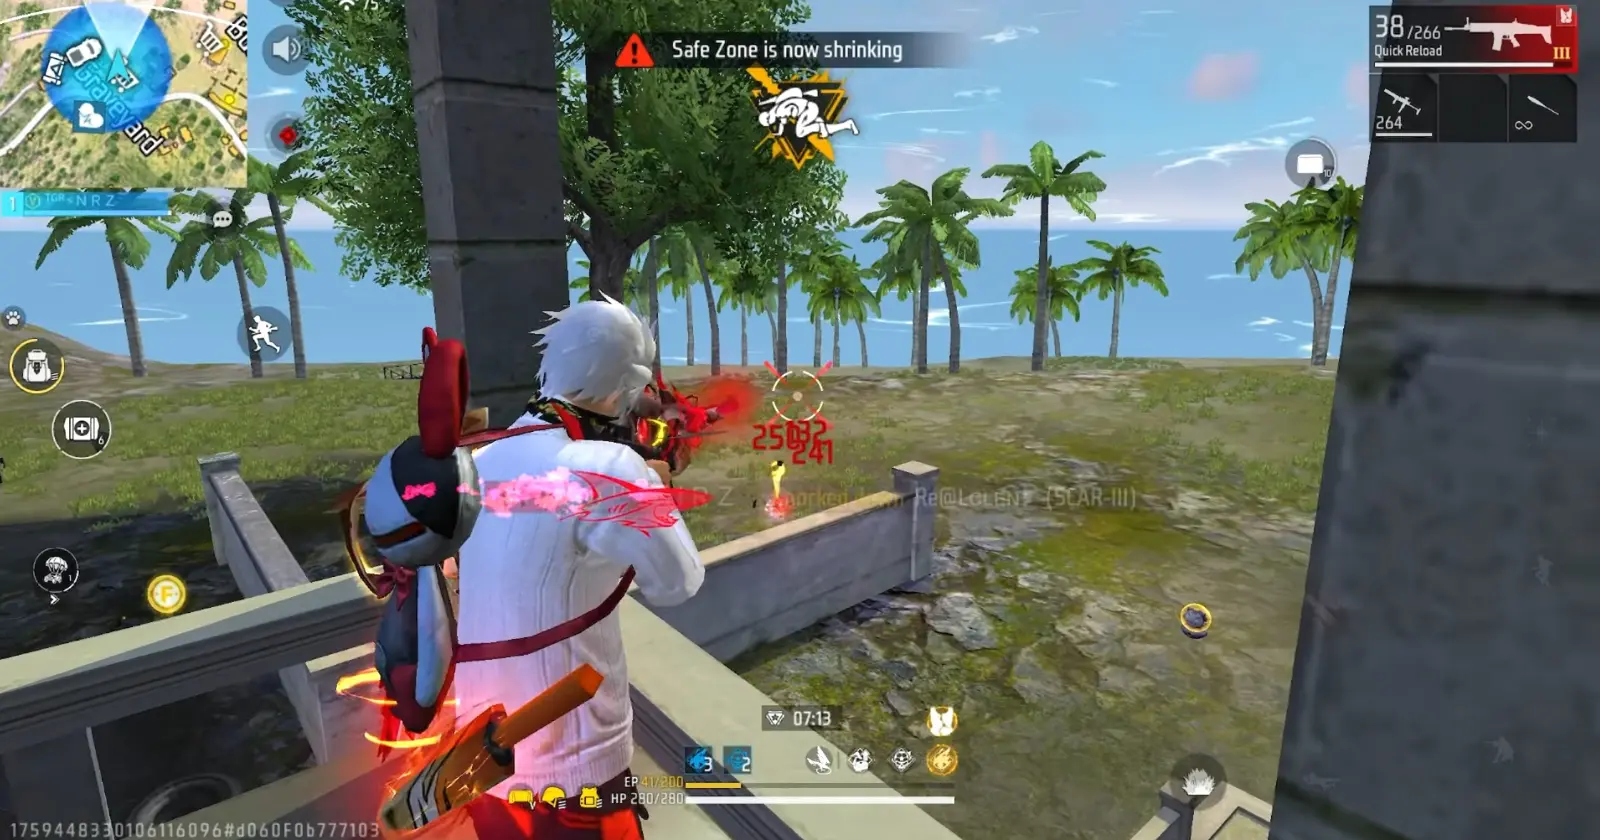 Screenshot showing anime headshot during Free Fire gameplay